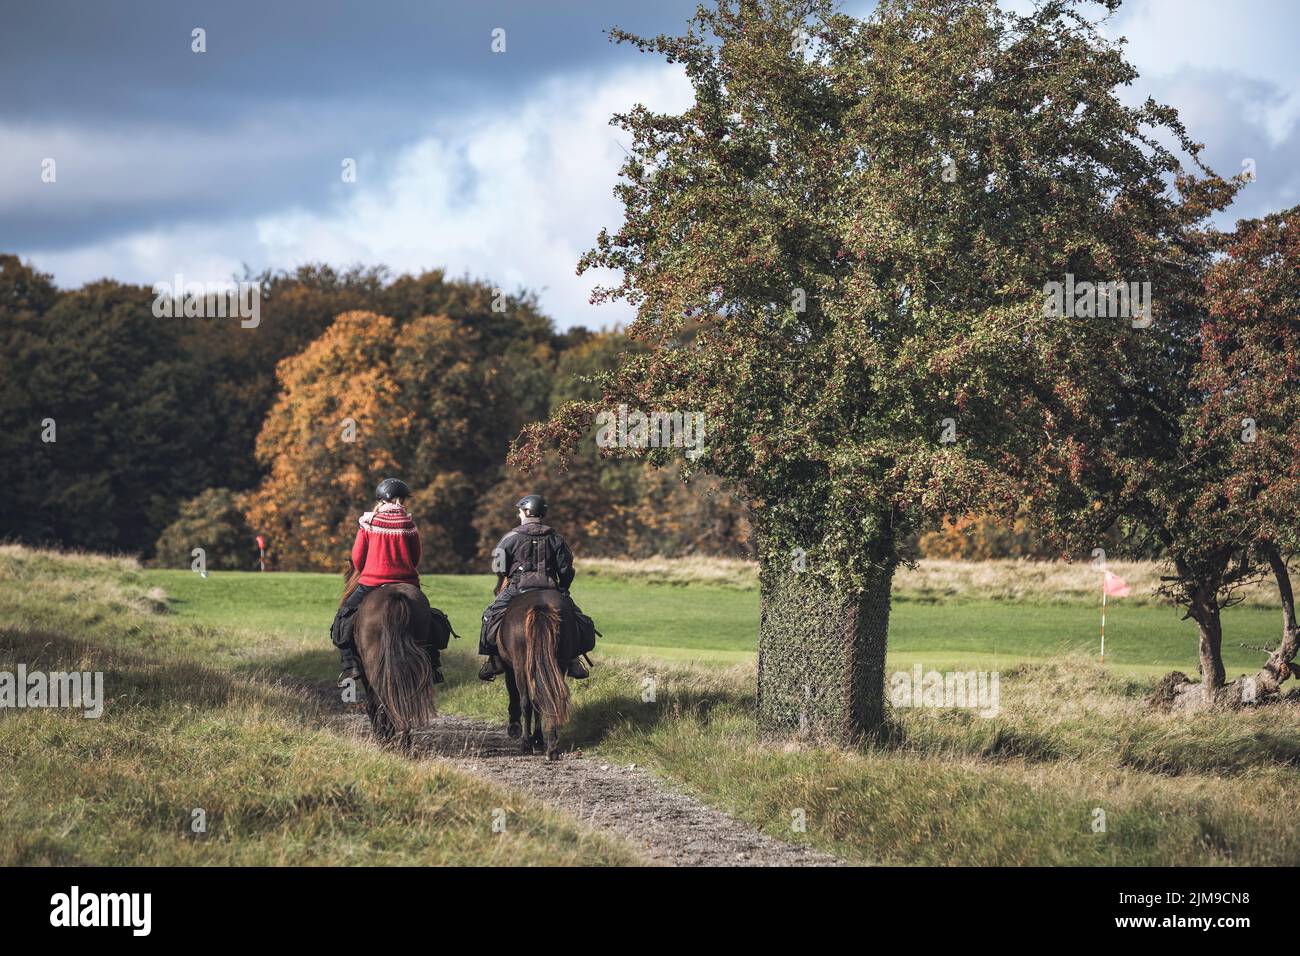 Two girls riding horses together in the Dyrehaven park, Jægersborg Dyrehave, Denmark Stock Photo